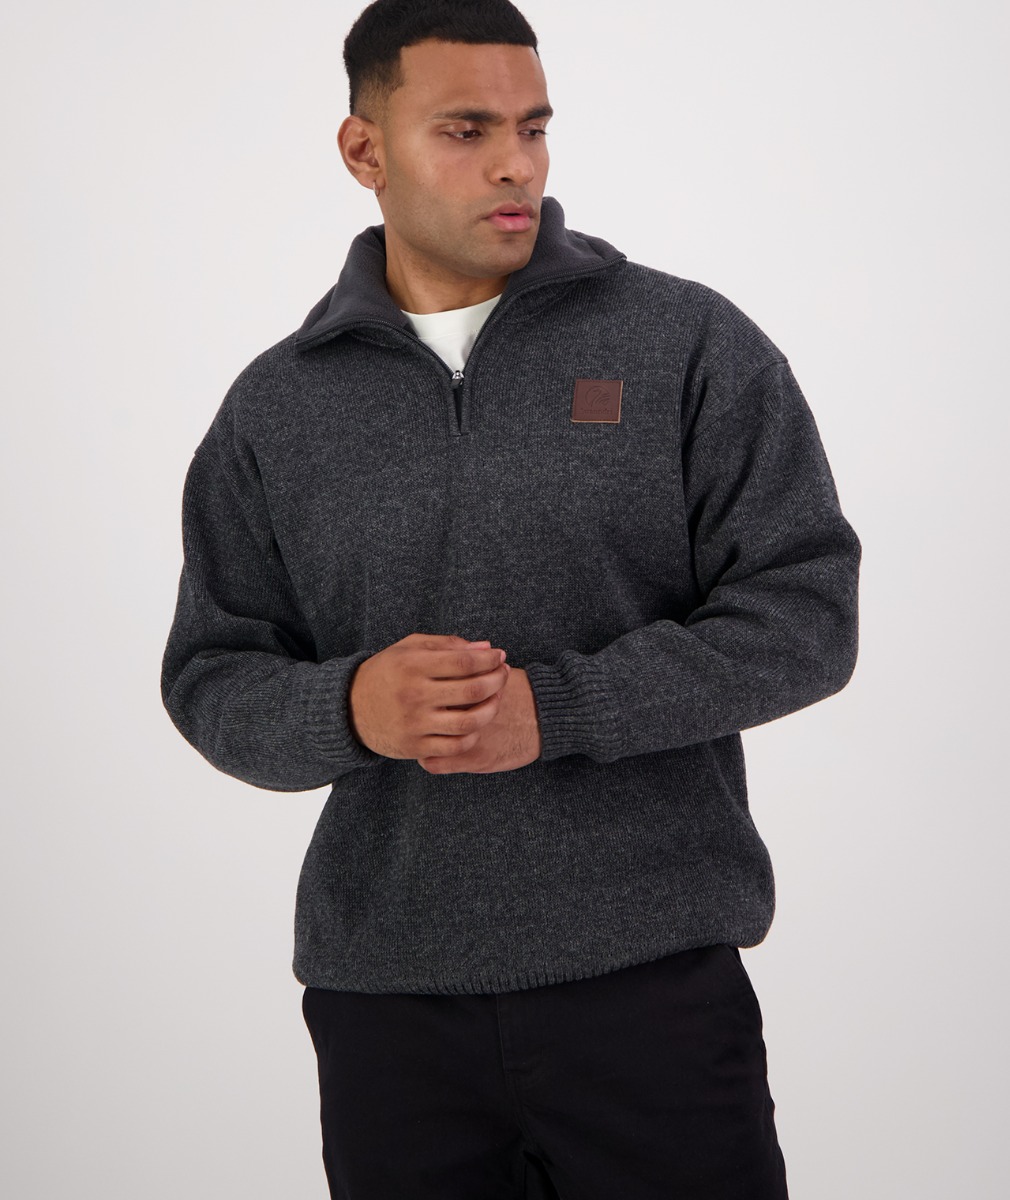 Men's Rhino Stormshield Wool Jersey with Windproof Lining